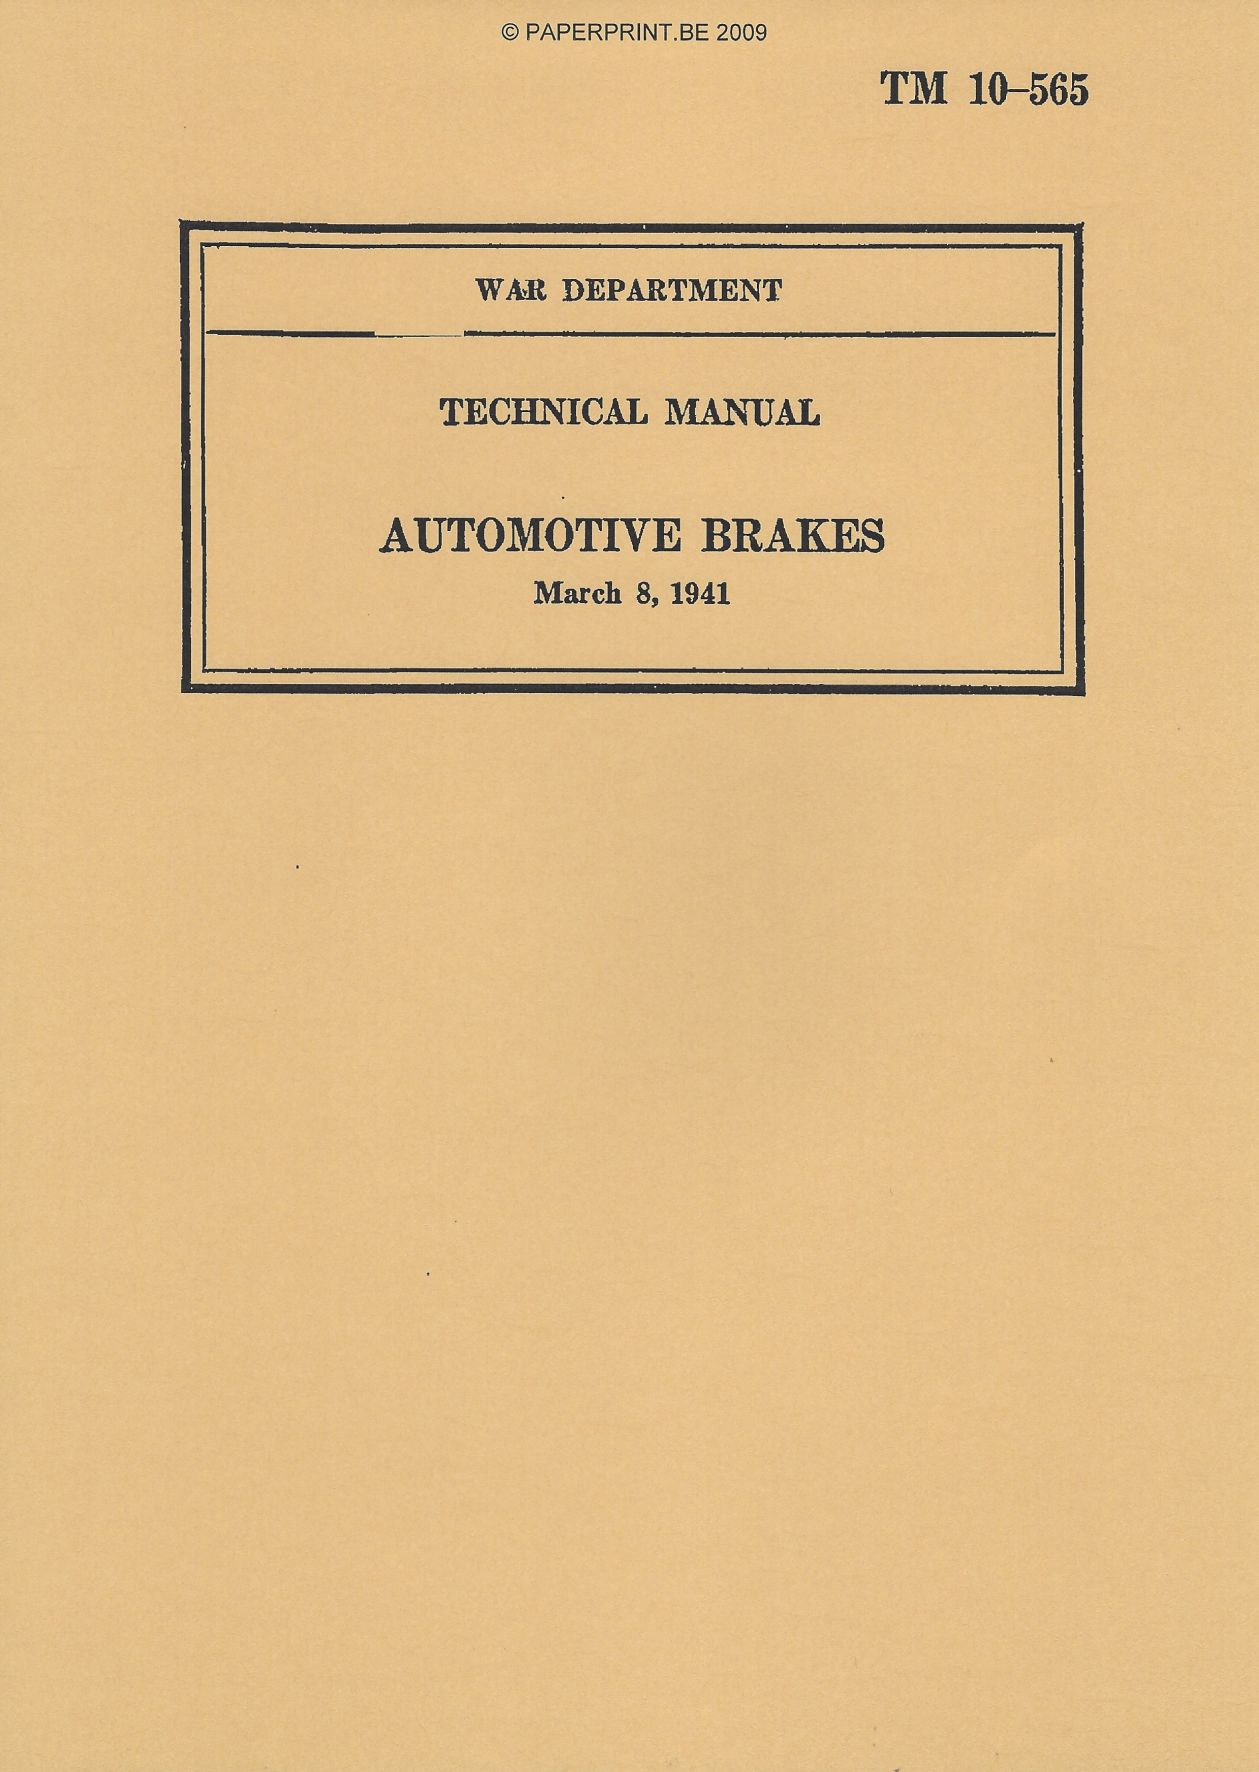 TM 10-565 US AUTOMOTIVE BRAKES